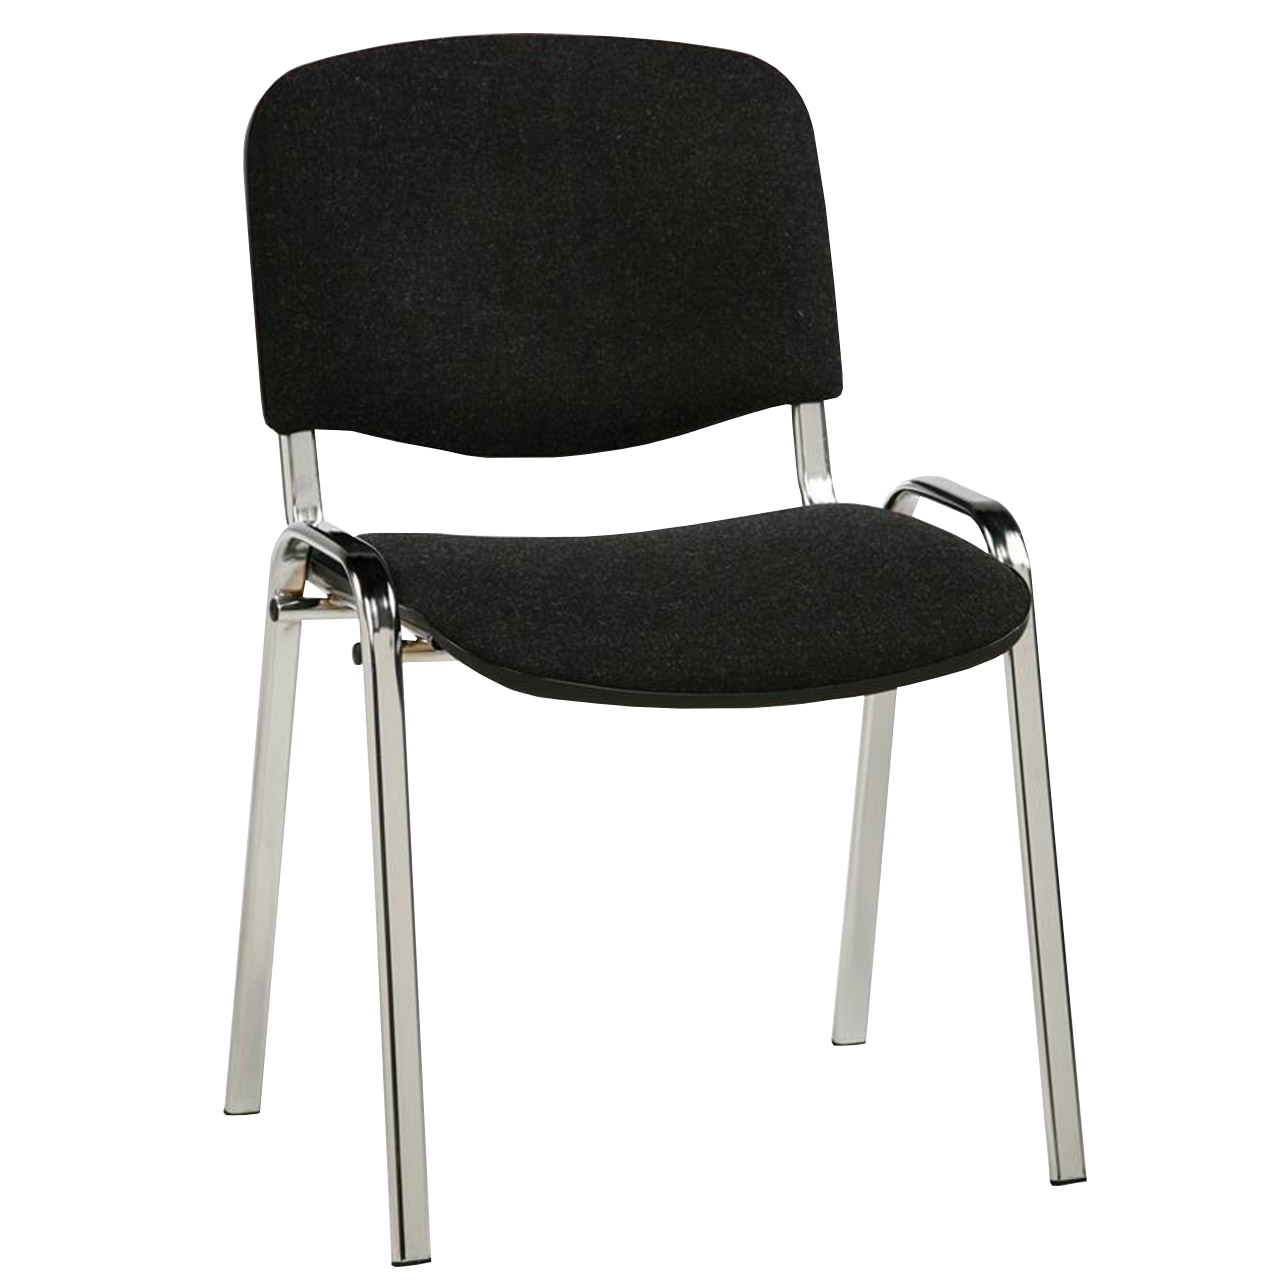 Черный хром стул. Стул nowy styl ISO Chrome. Стул офисный easy Chair изо с-11 черный (ткань, металл черный). Стул изо хром Фабрикант черный. Стул ISO Chrome v18.